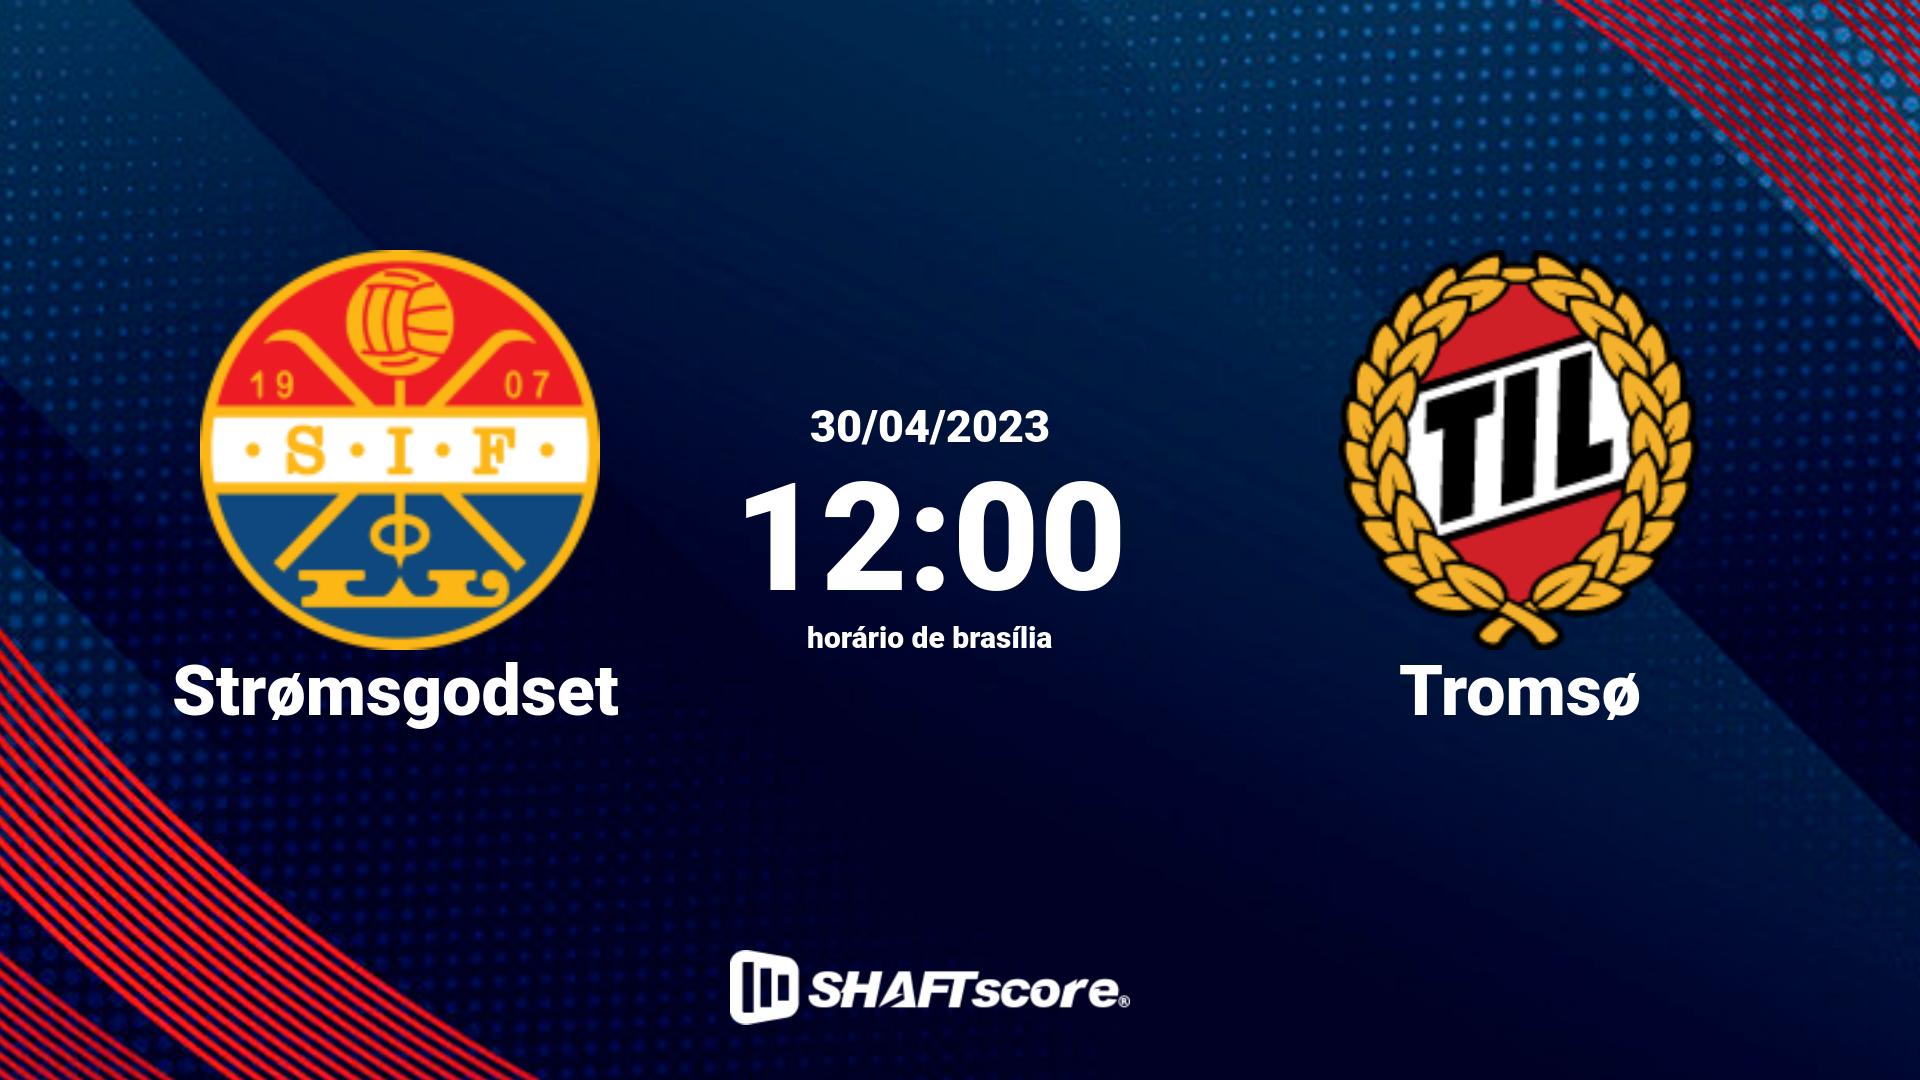 Estatísticas do jogo Strømsgodset vs Tromsø 30.04 12:00